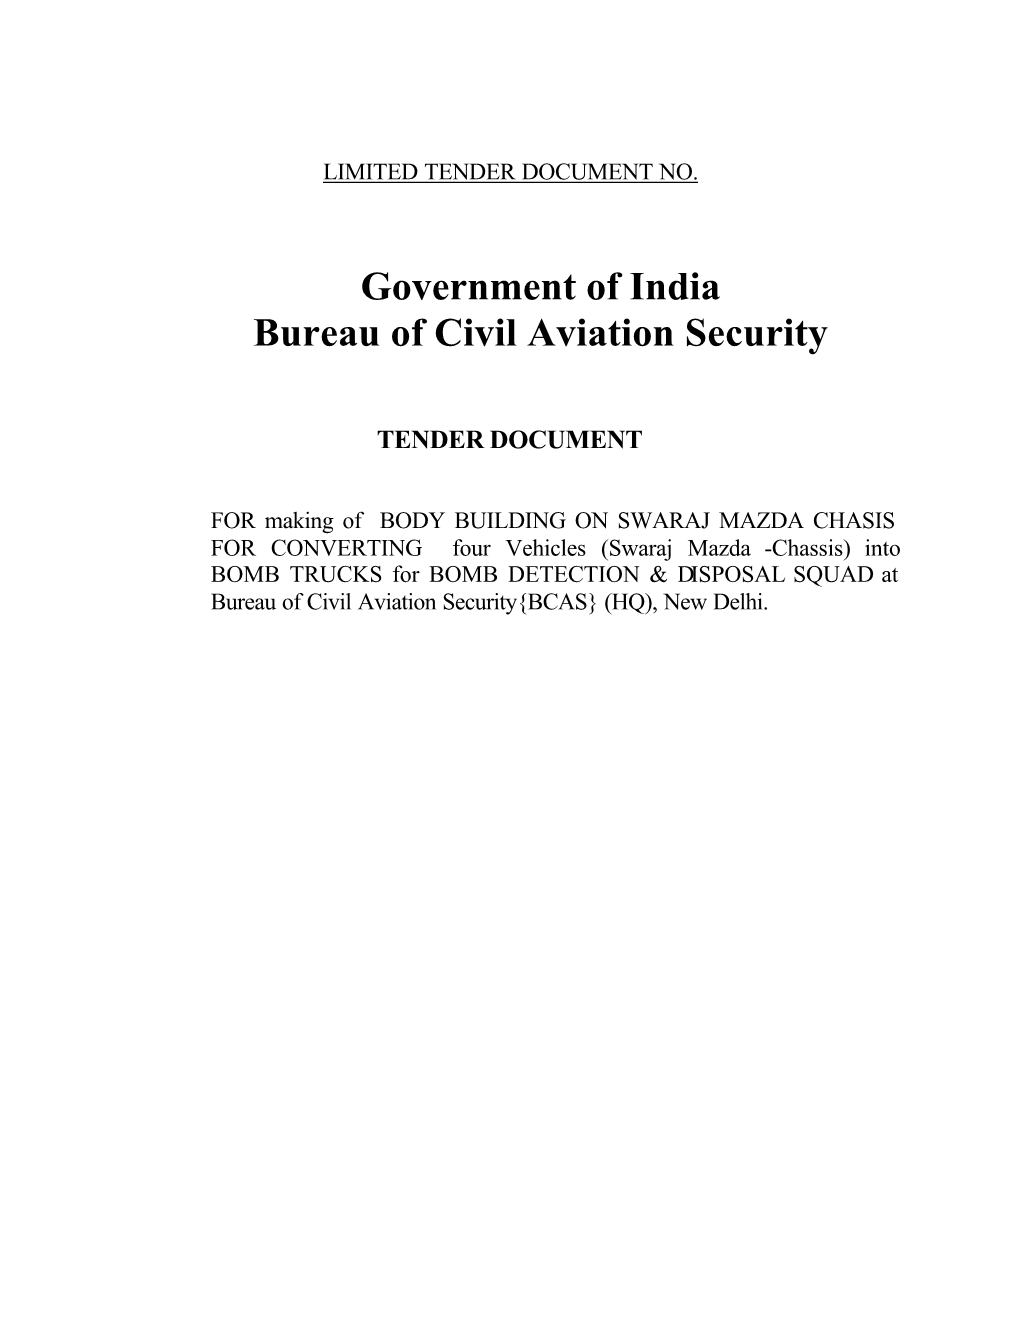 Government of India Bureau of Civil Aviation Security